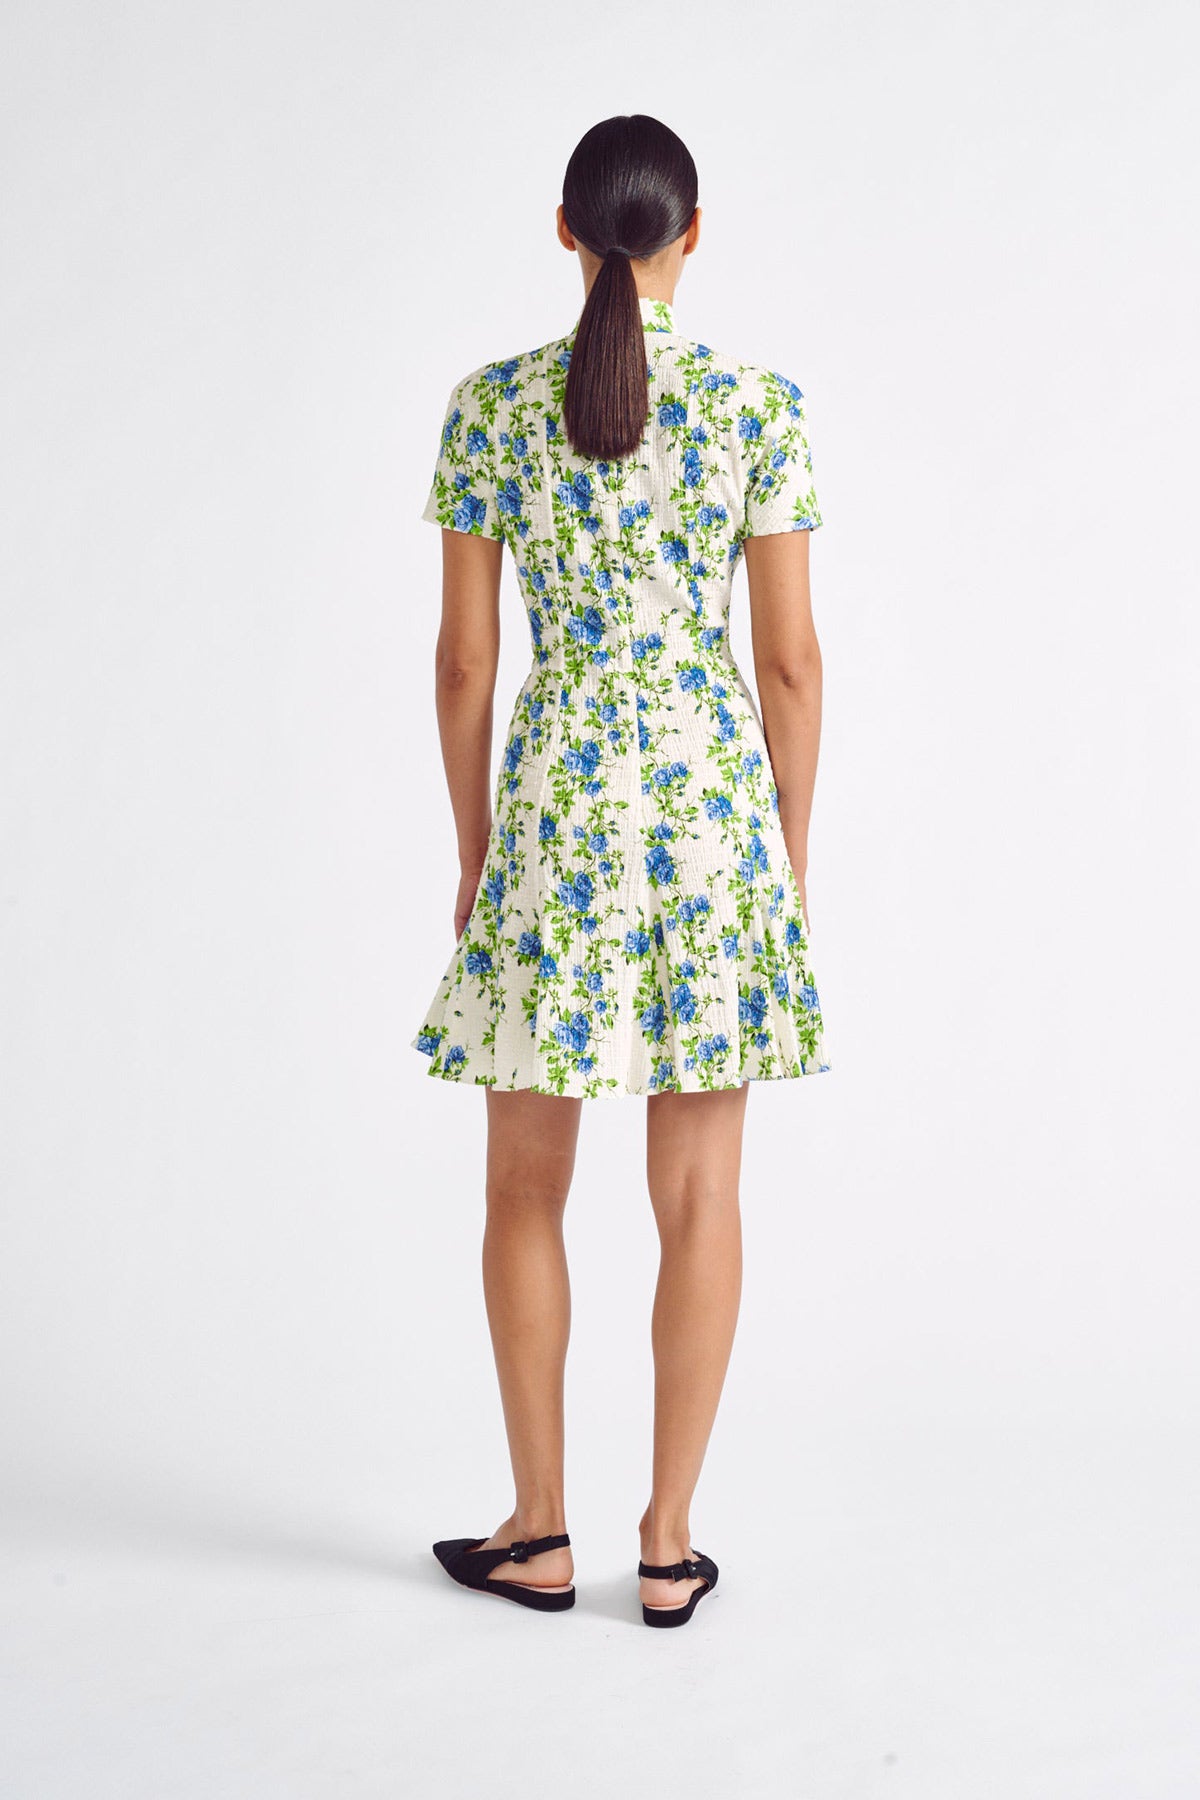 Pippa Dress | Floral Print High-Neck Mini Dress in Cotton | Emilia Wickstead